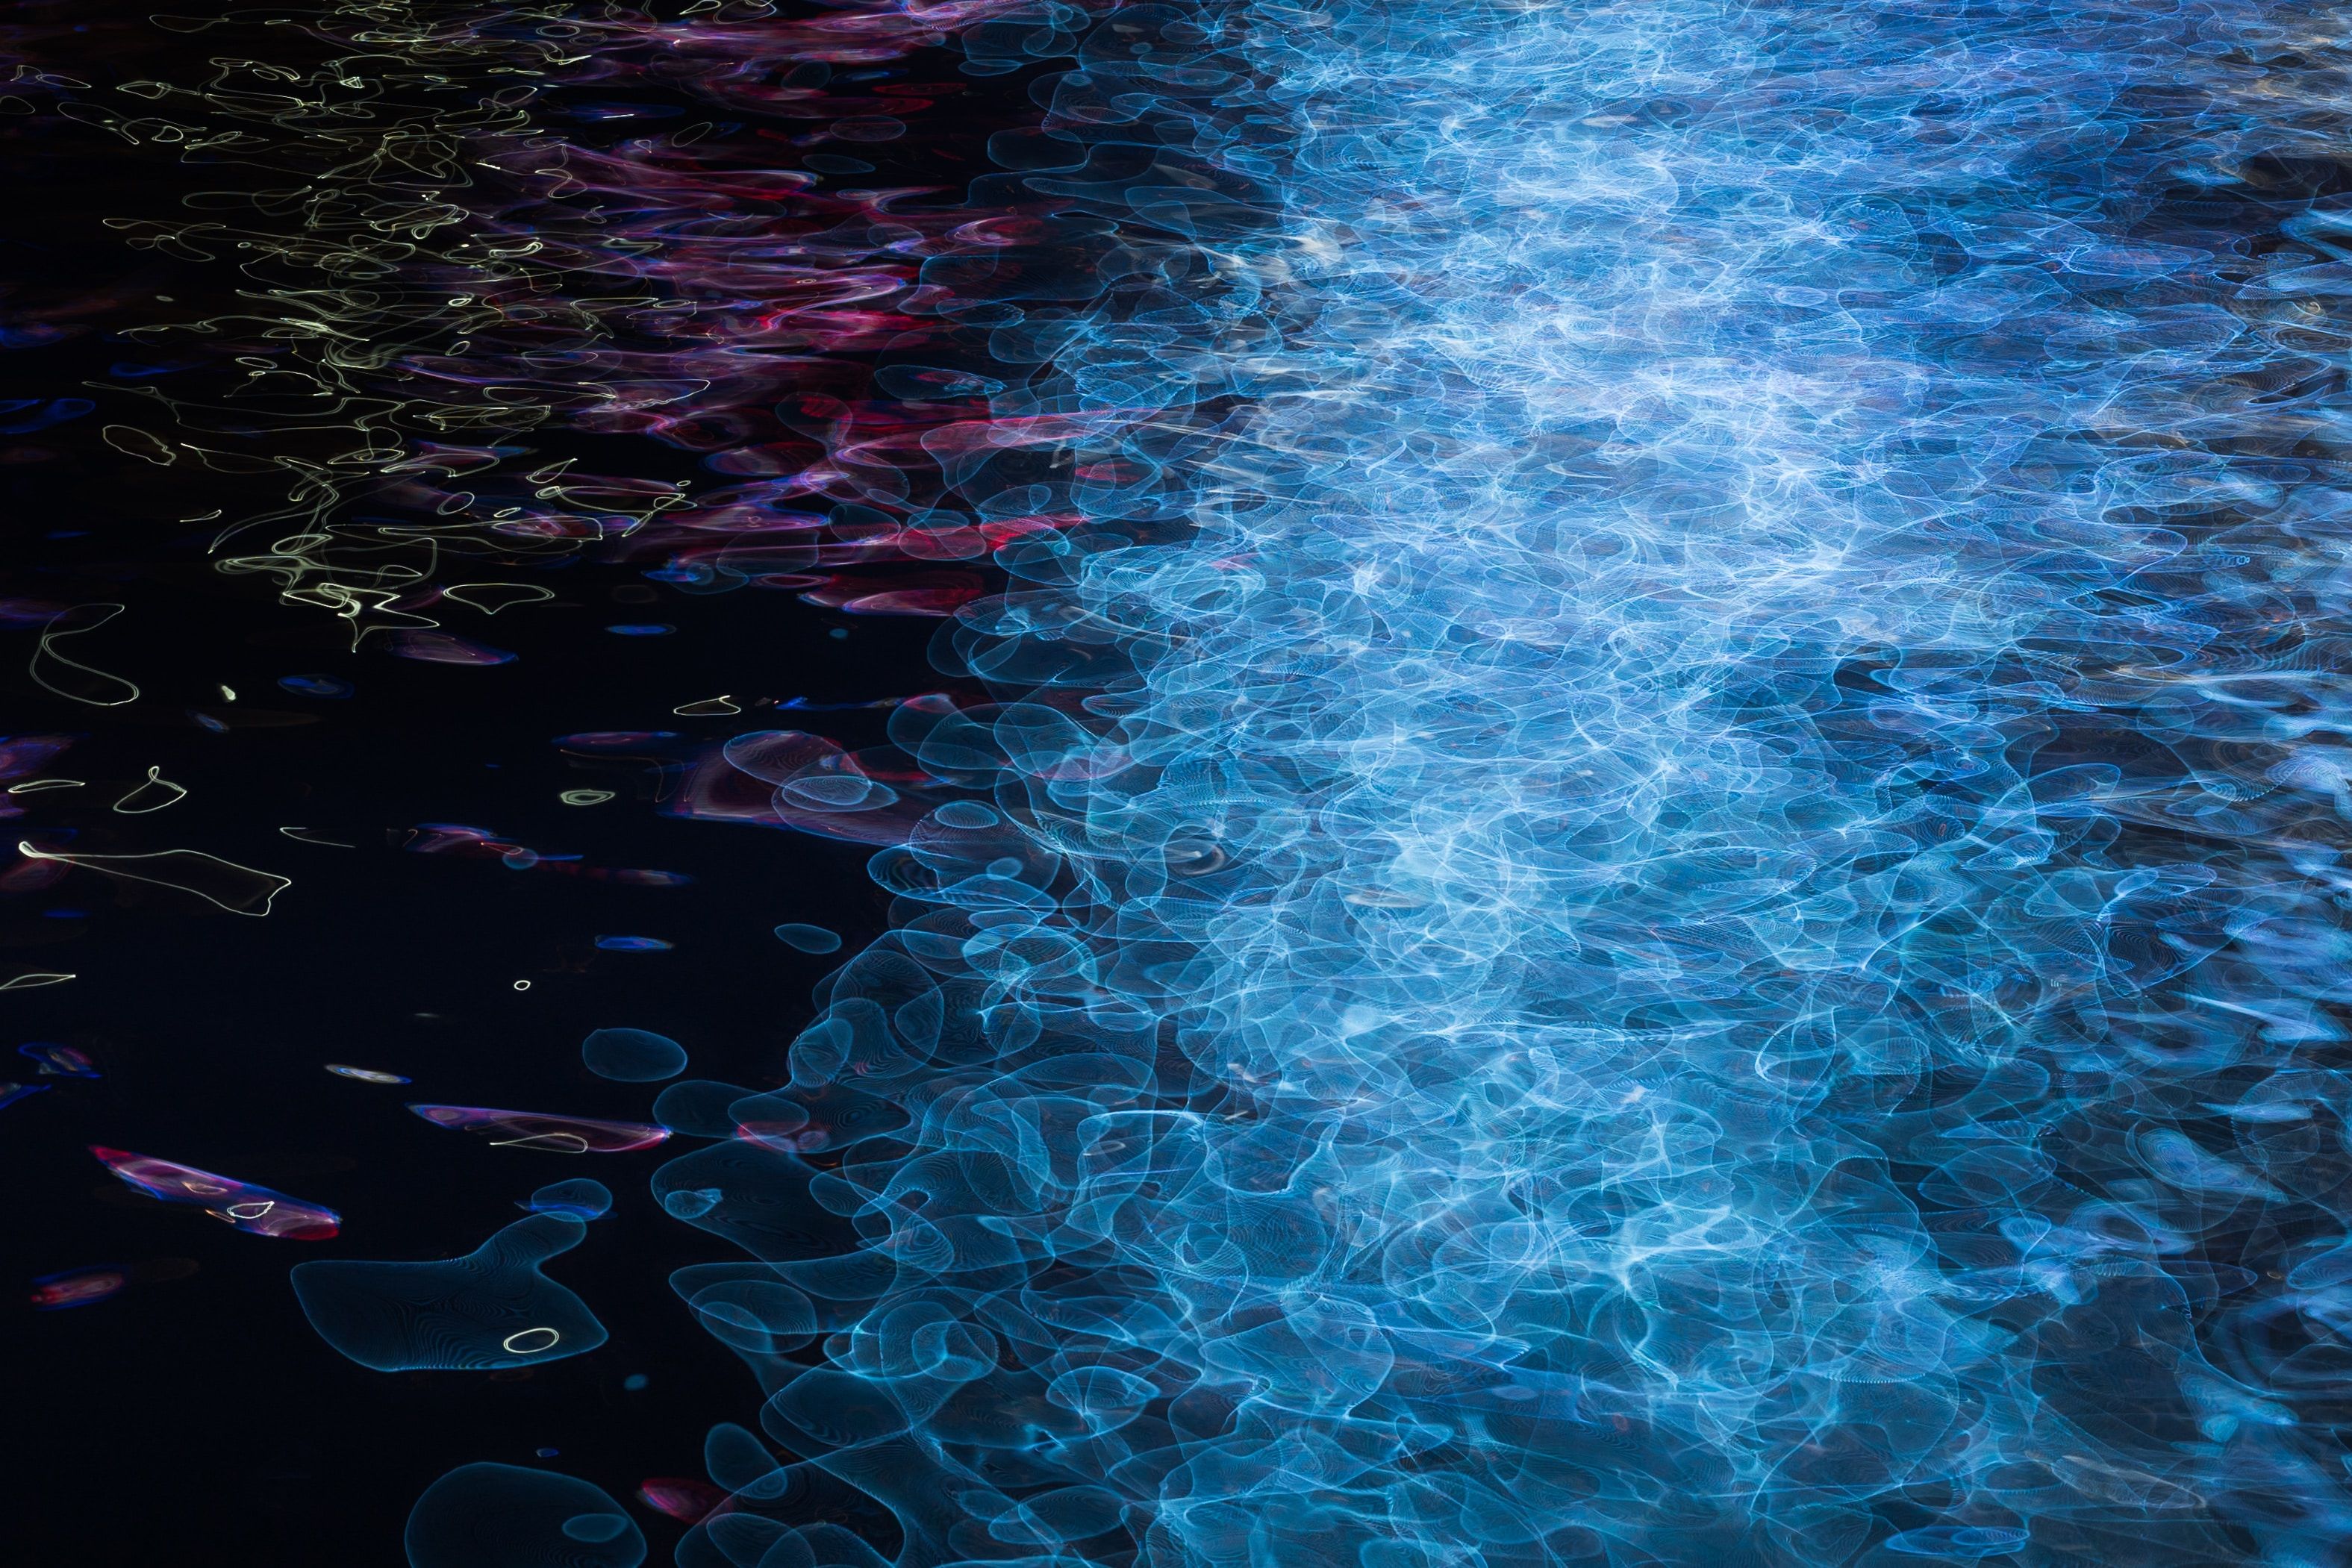 Neon Lights Reflecting In The Dark Water, HD Artist, 4k Wallpaper